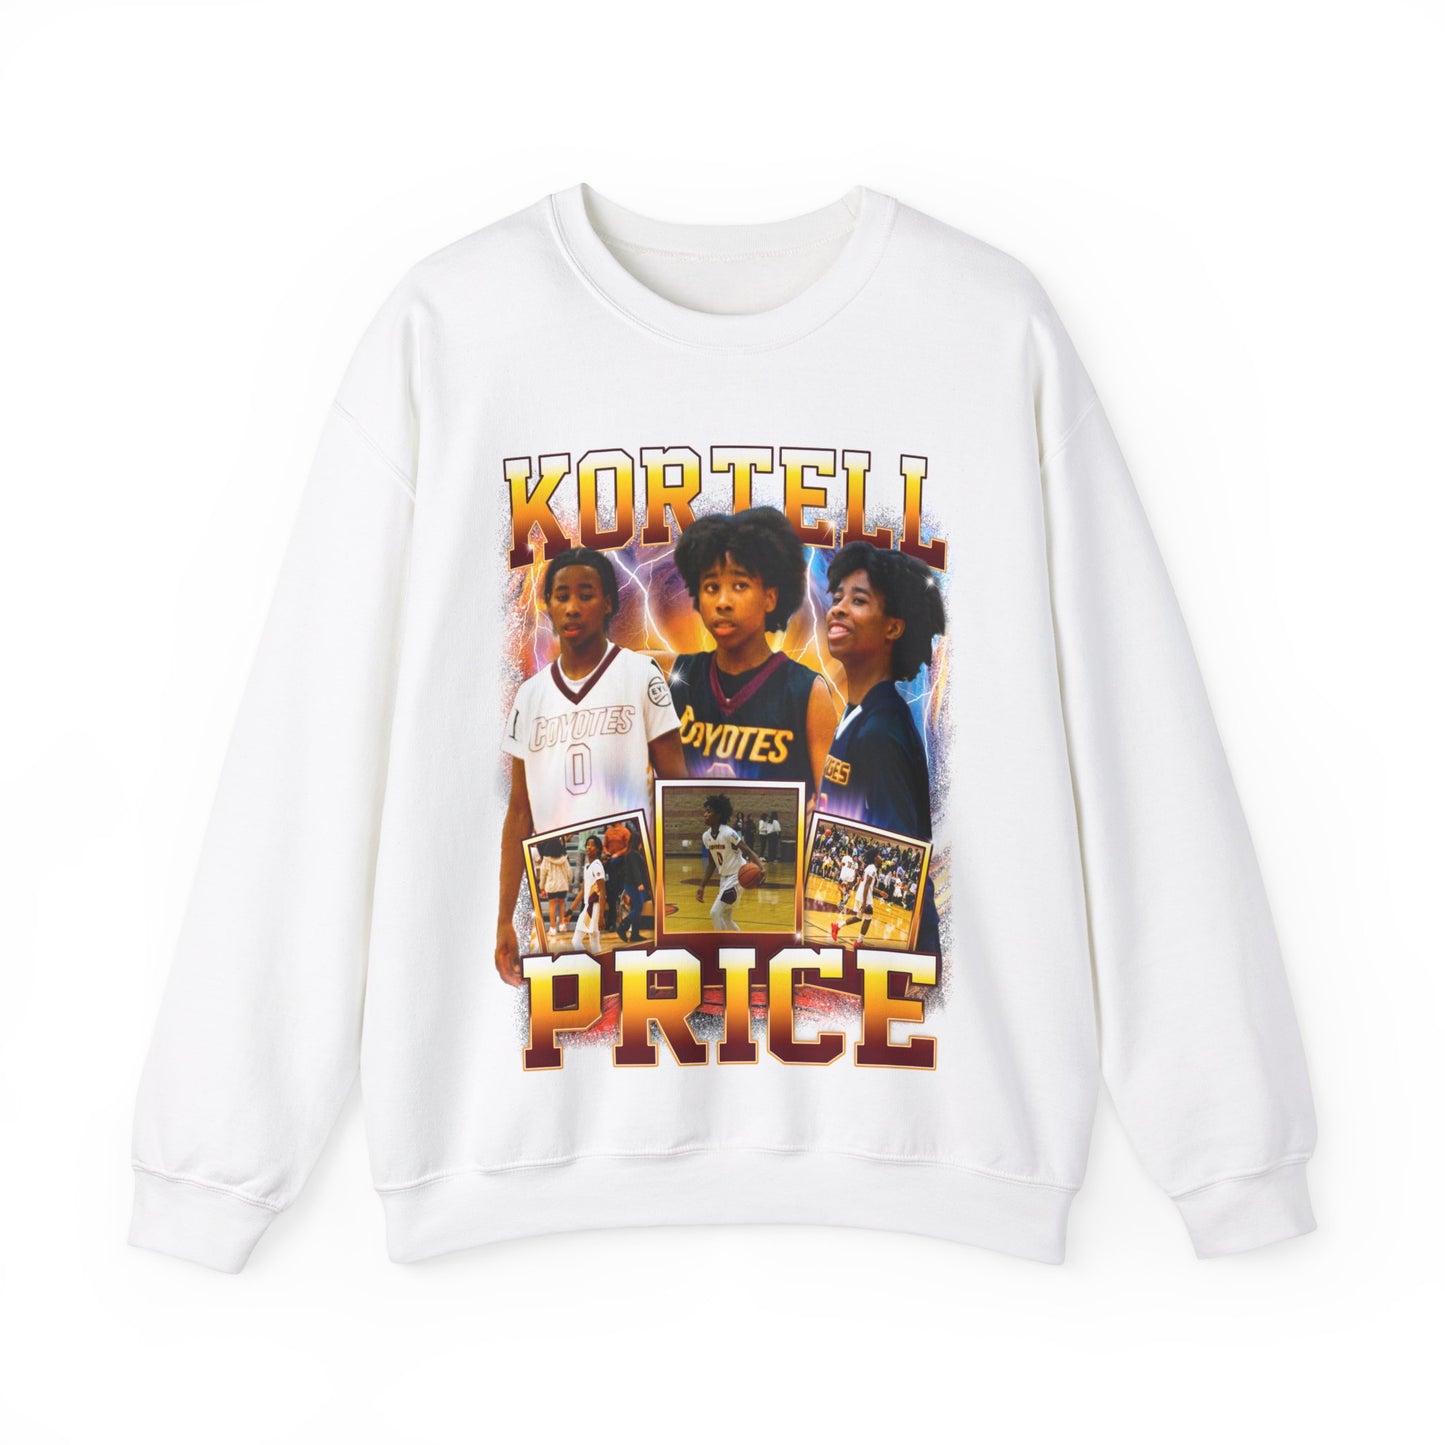 Kortell Price Crewneck Sweatshirt